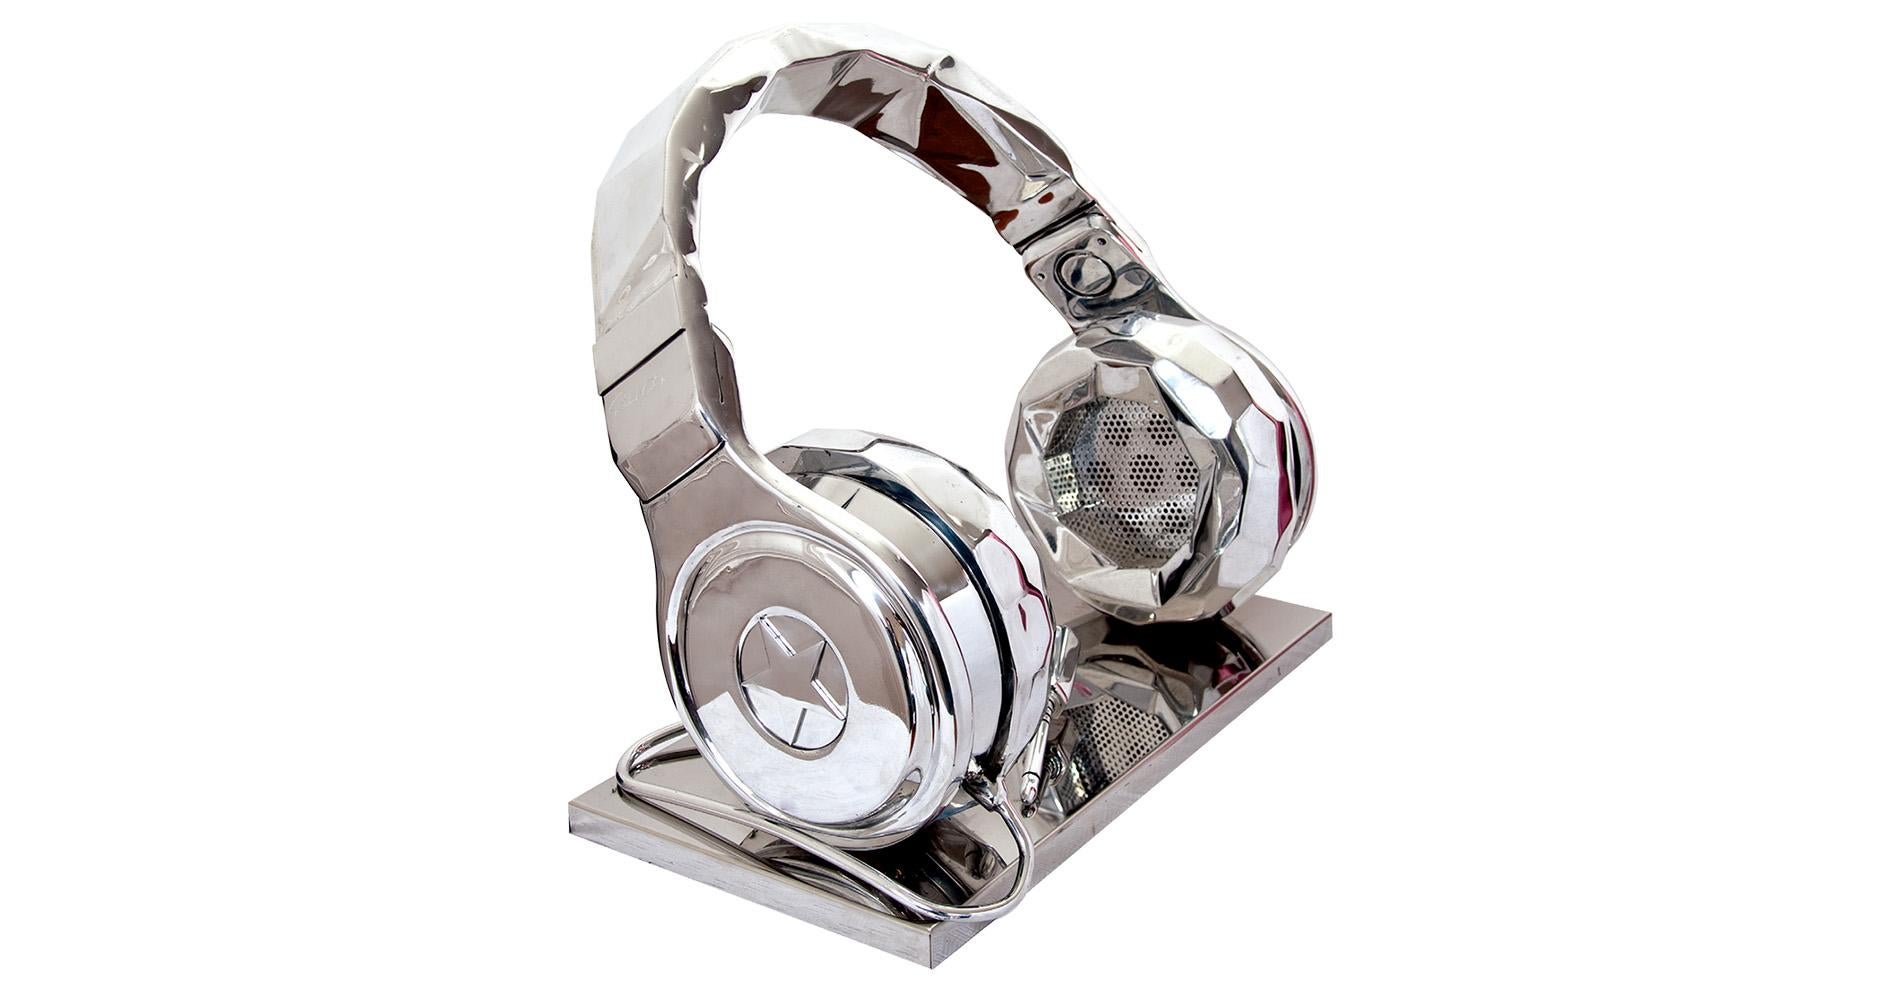  Headphones DJ - Sculpture by Richard Orlinski